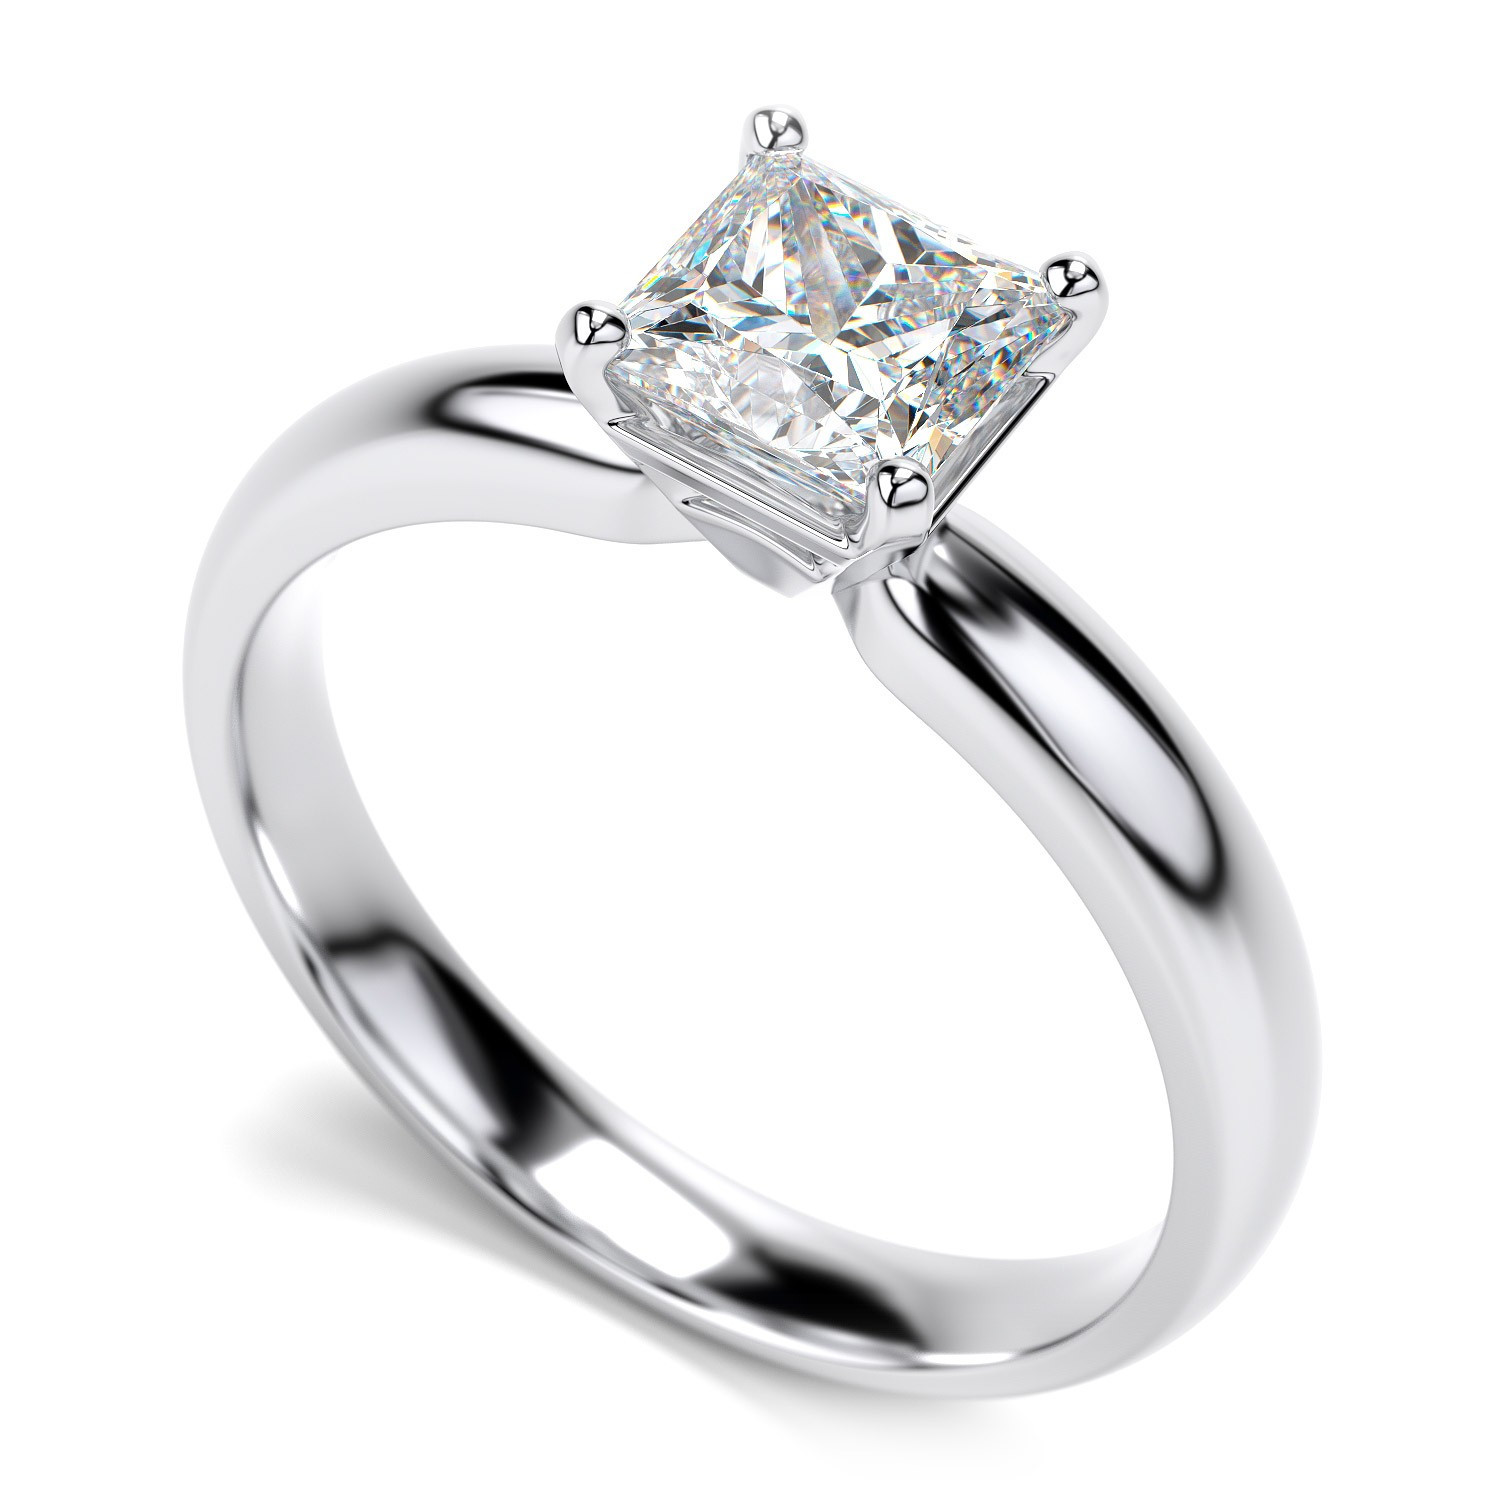 Princess Cut White Gold Engagement Rings
 14K White Gold Diamond Princess Cut Solitaire Engagement